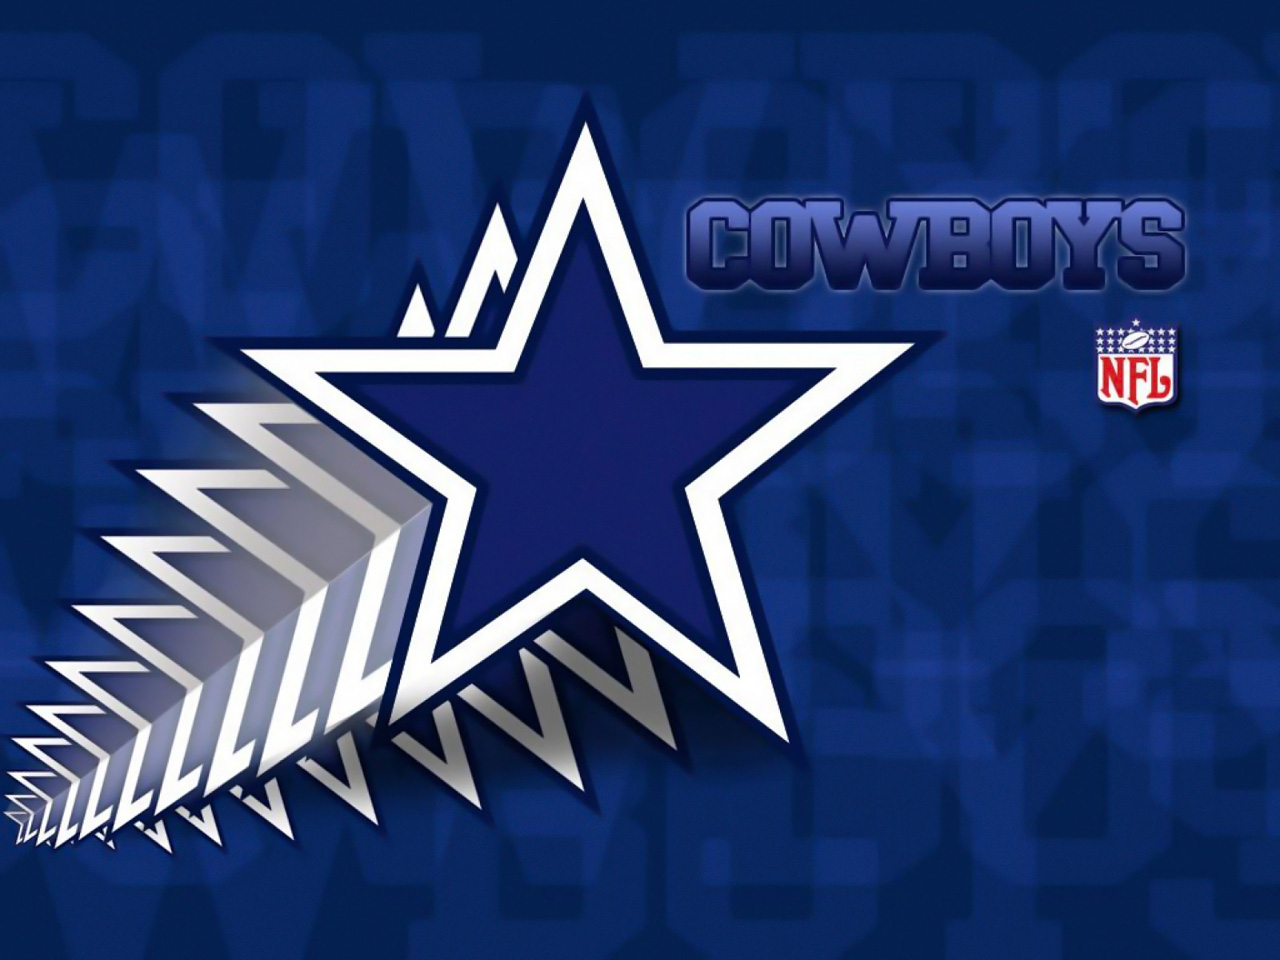 New Dallas Cowboys Wallpaper Background